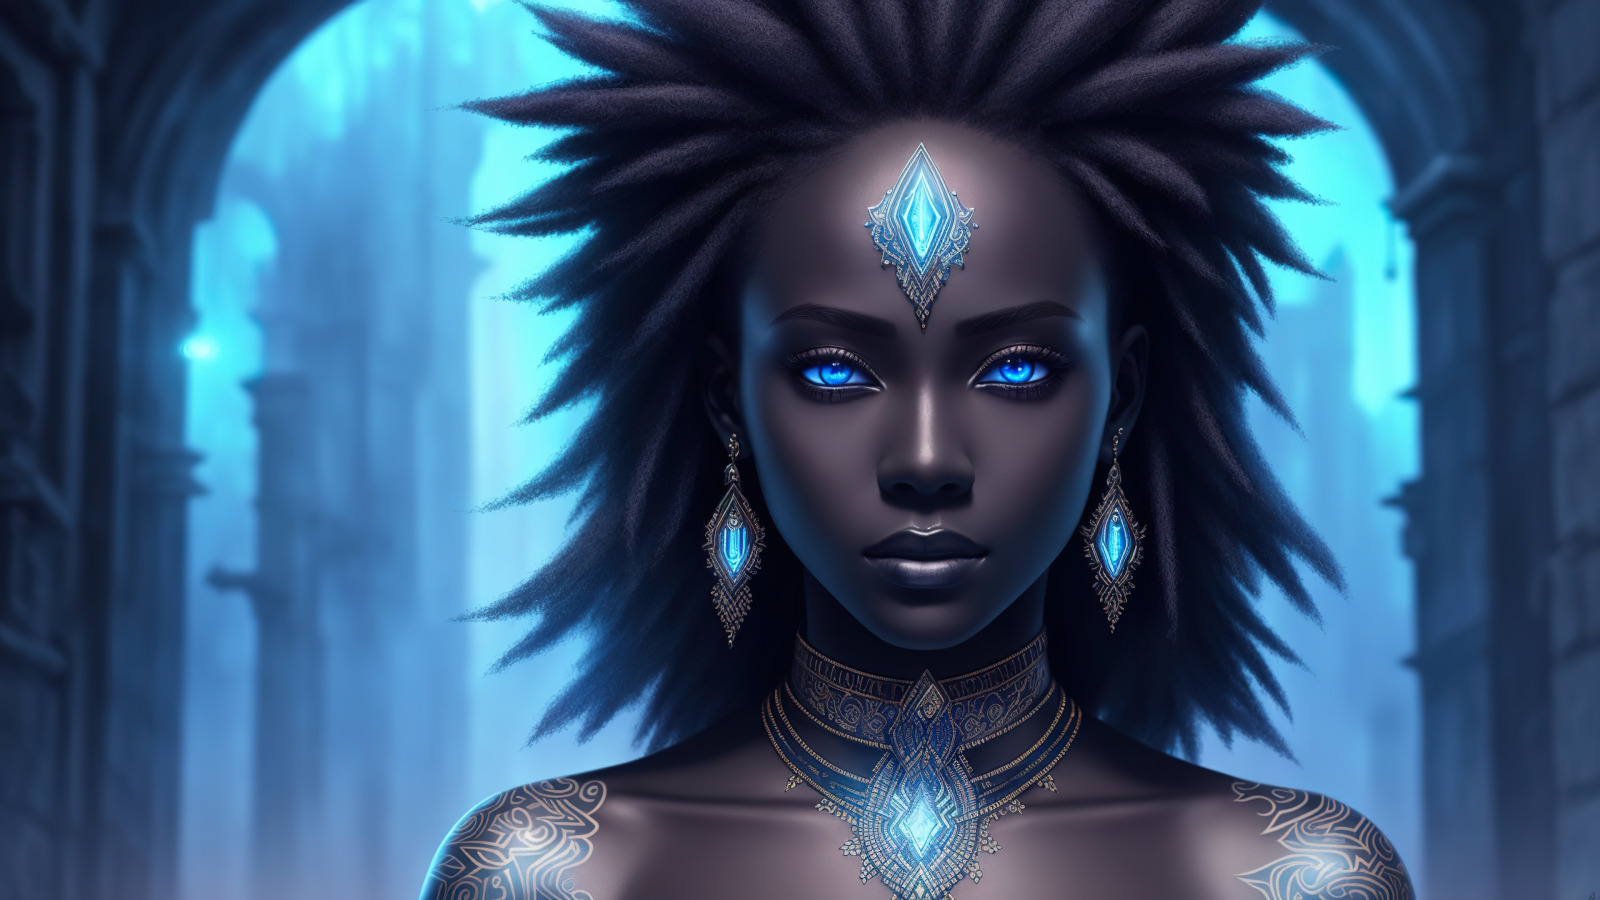 Download Wallpaper Girl Fantasy Black Art Digital Art Fantasy Art Fantasy Girl Blue Eye 